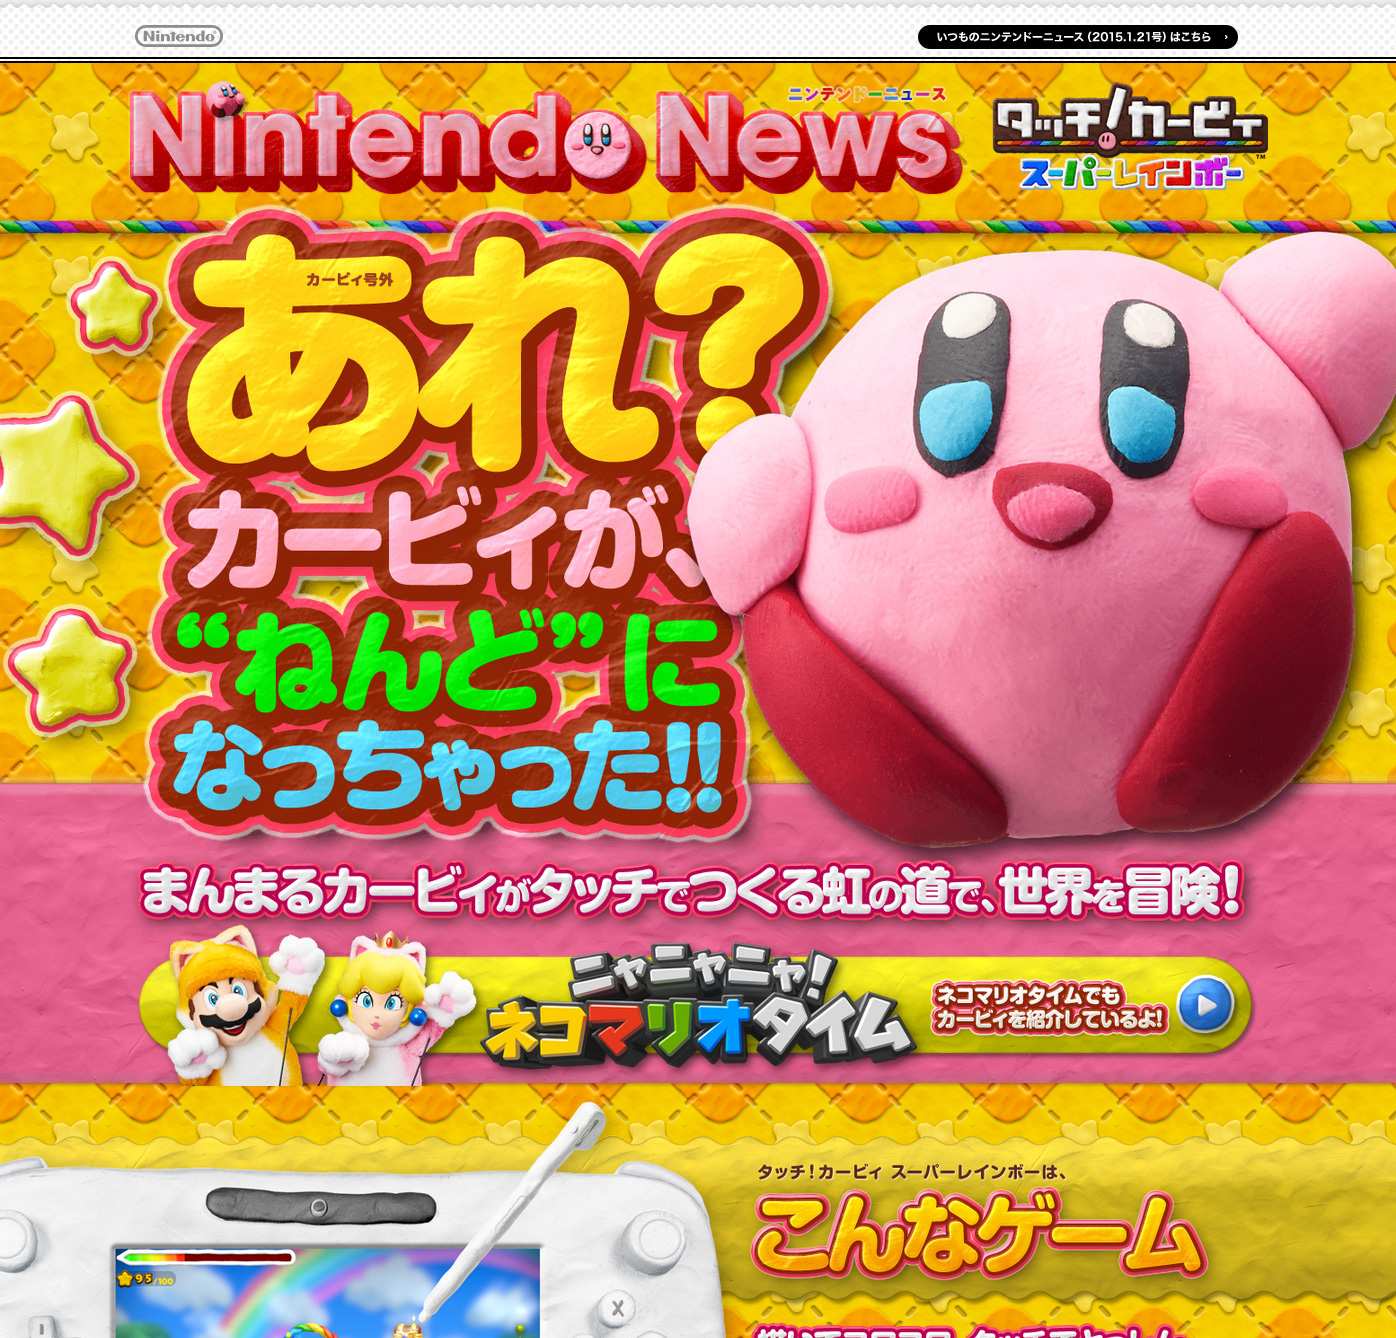 Nintendo News」、Wii U「タッチ！カービィ スーパーレインボー」特集